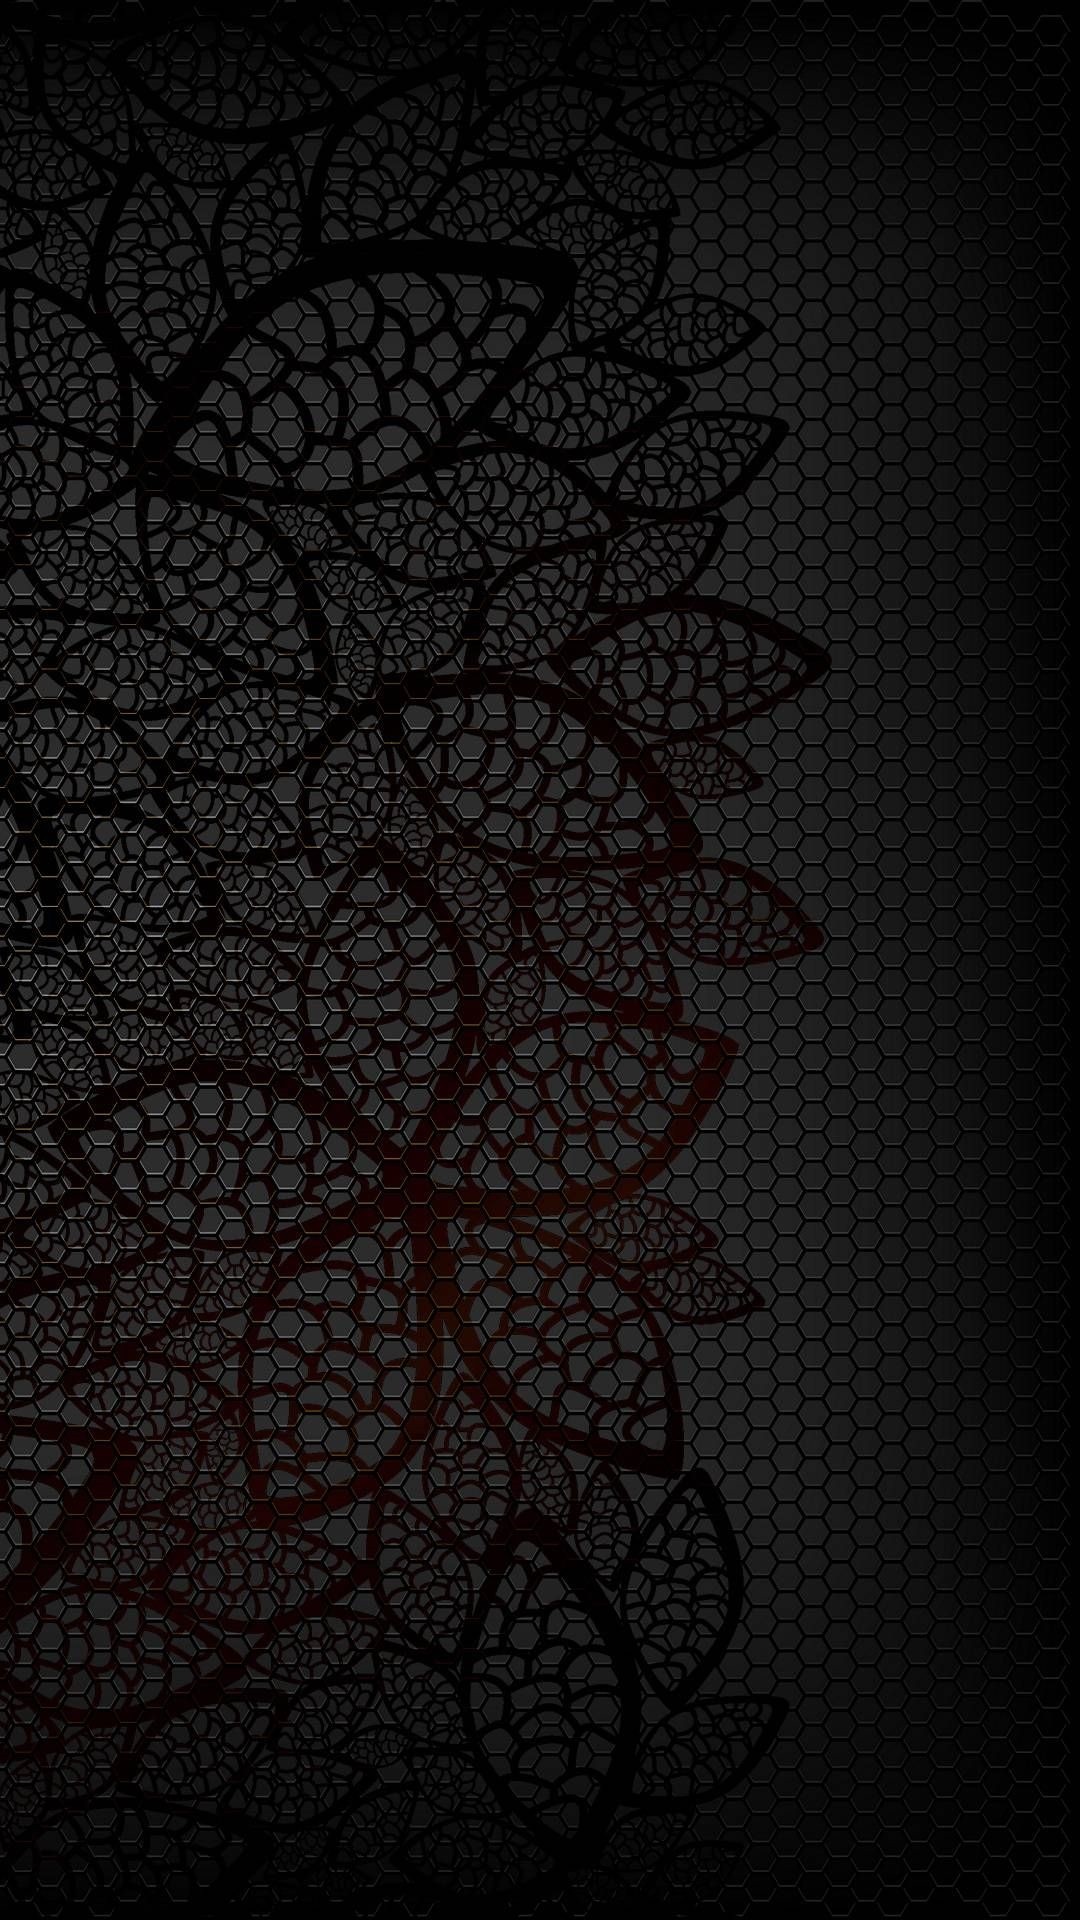 Dark hd wallpaper for iphone